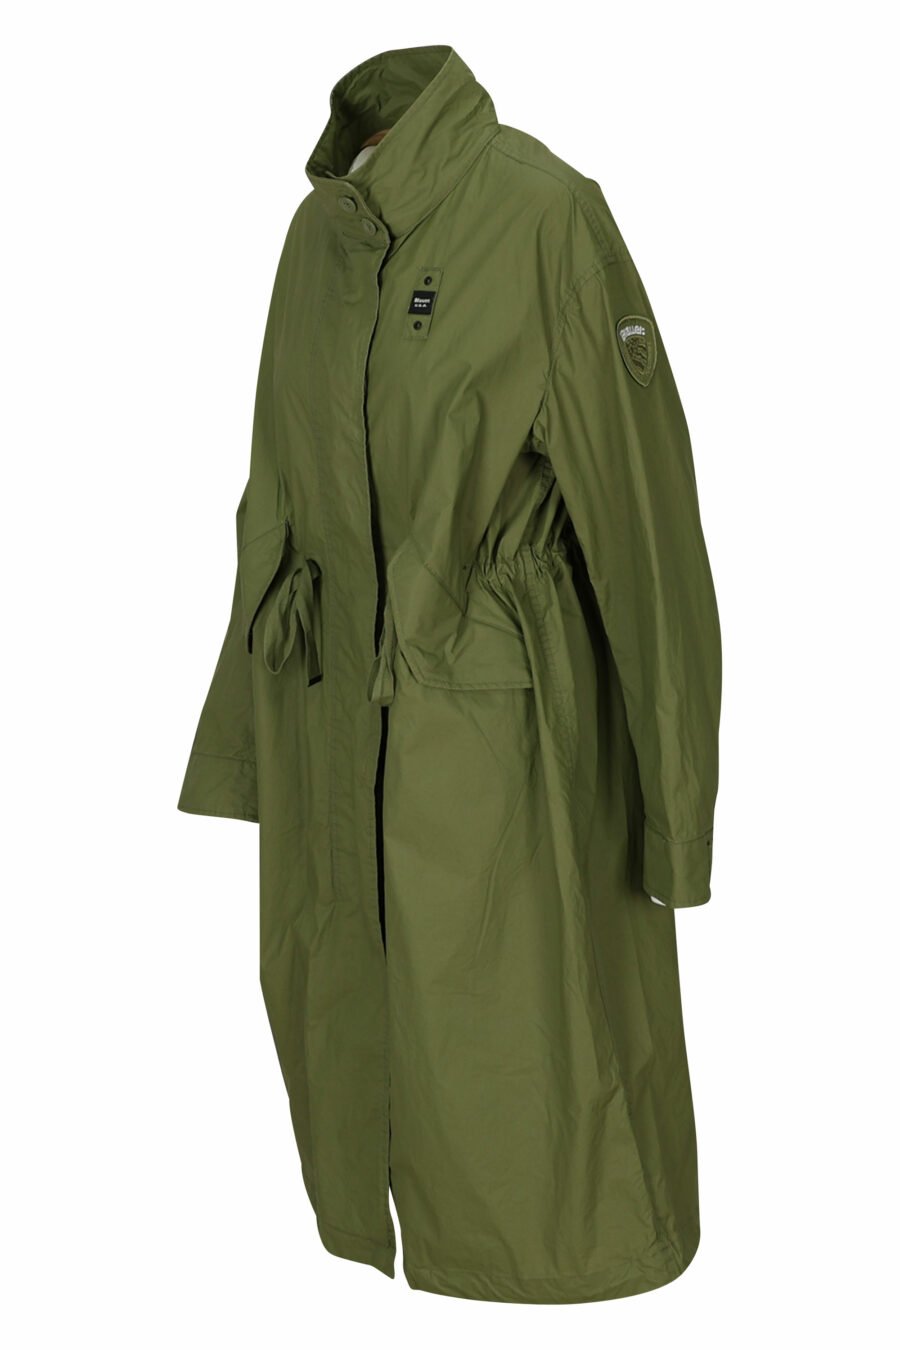 Gabardina verde militar impermeable y logo lateral - 8058610764999 1